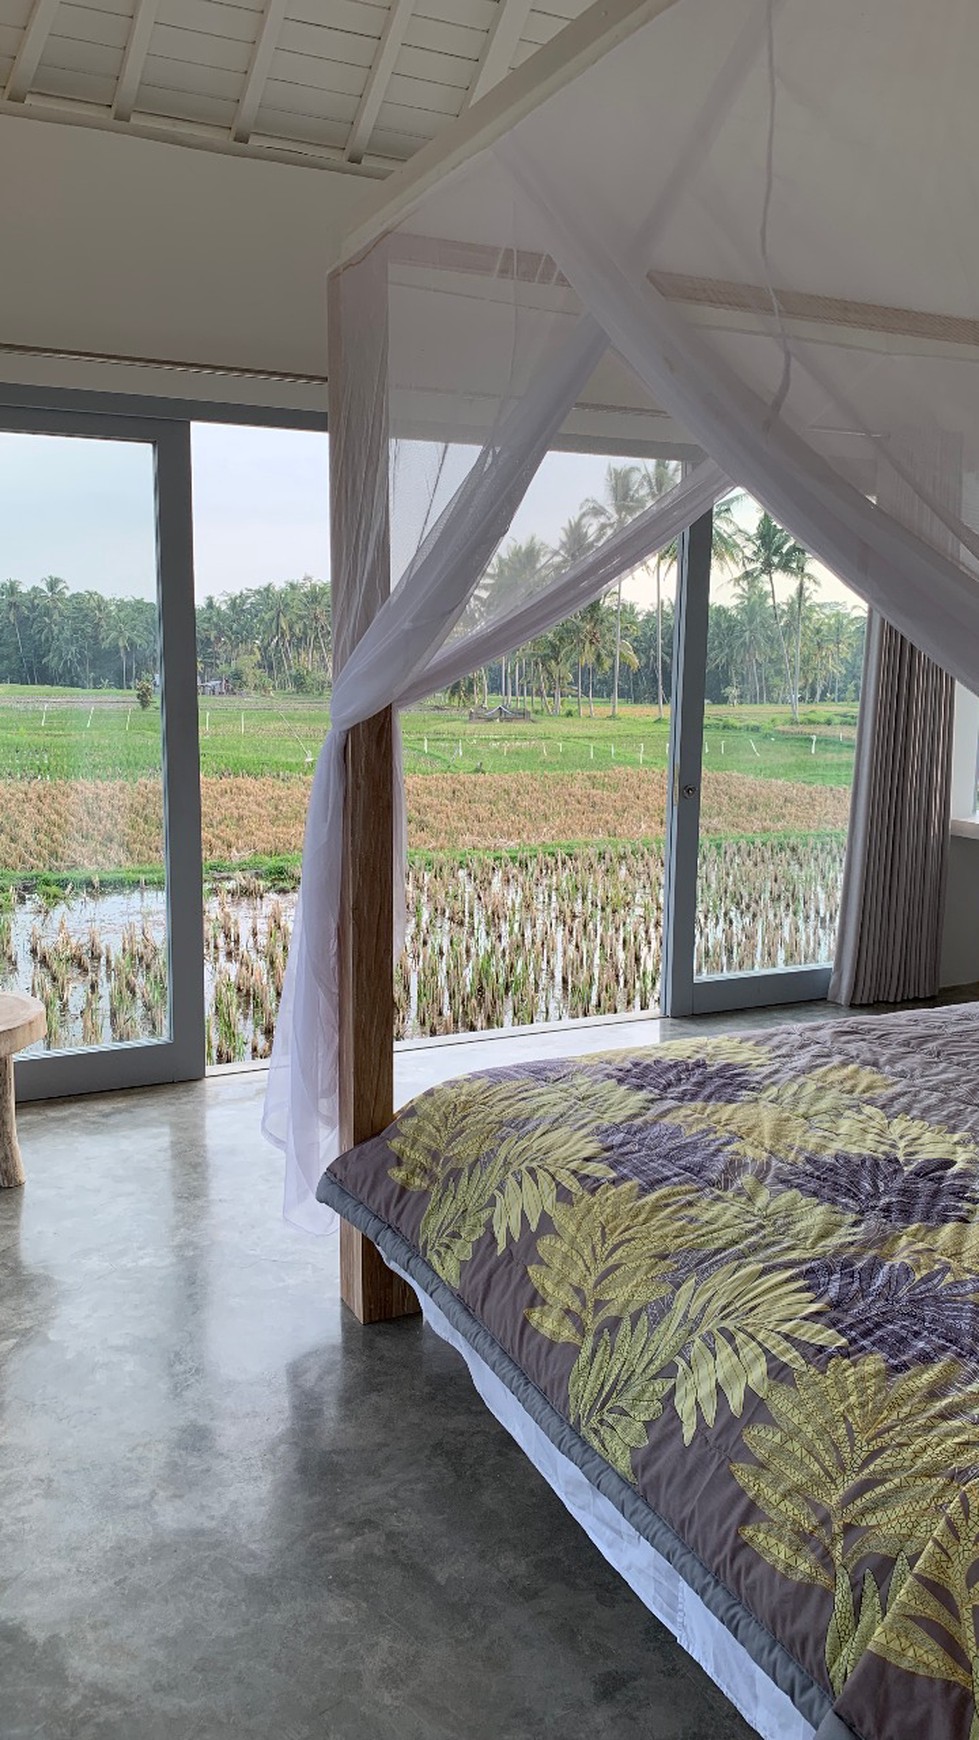 BEAUTIFUL 3 BEDROOM VILLA - Rice Field Views - Leasehold 